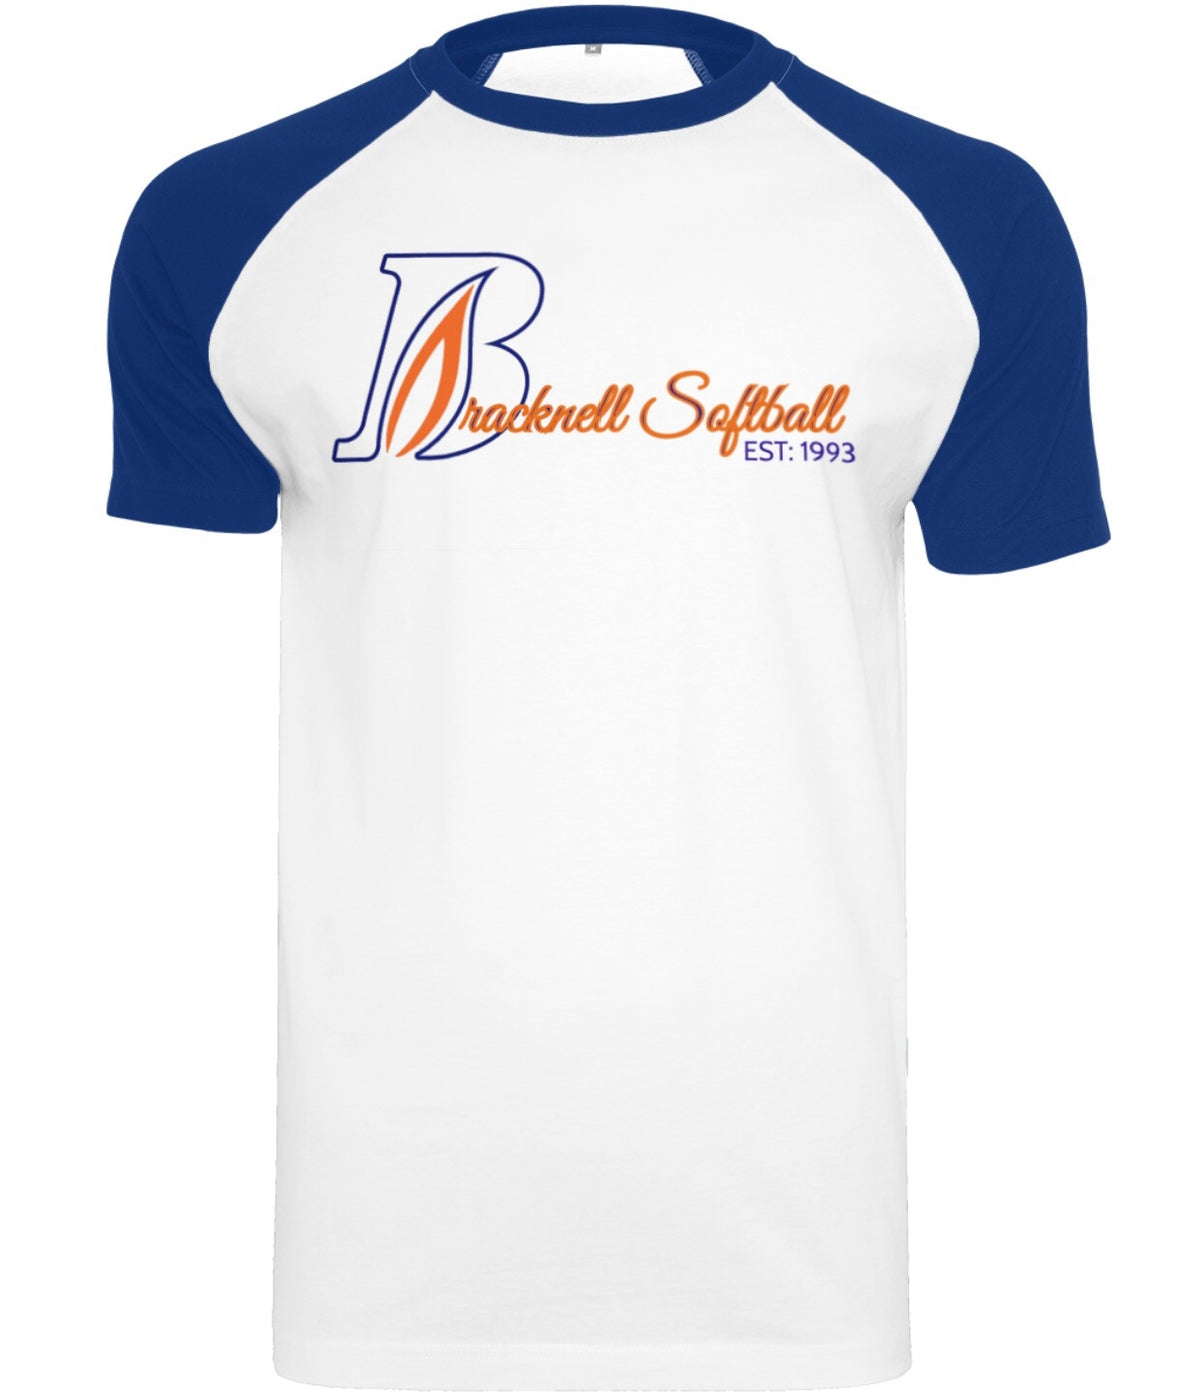 Bracknell Softball t-shirt